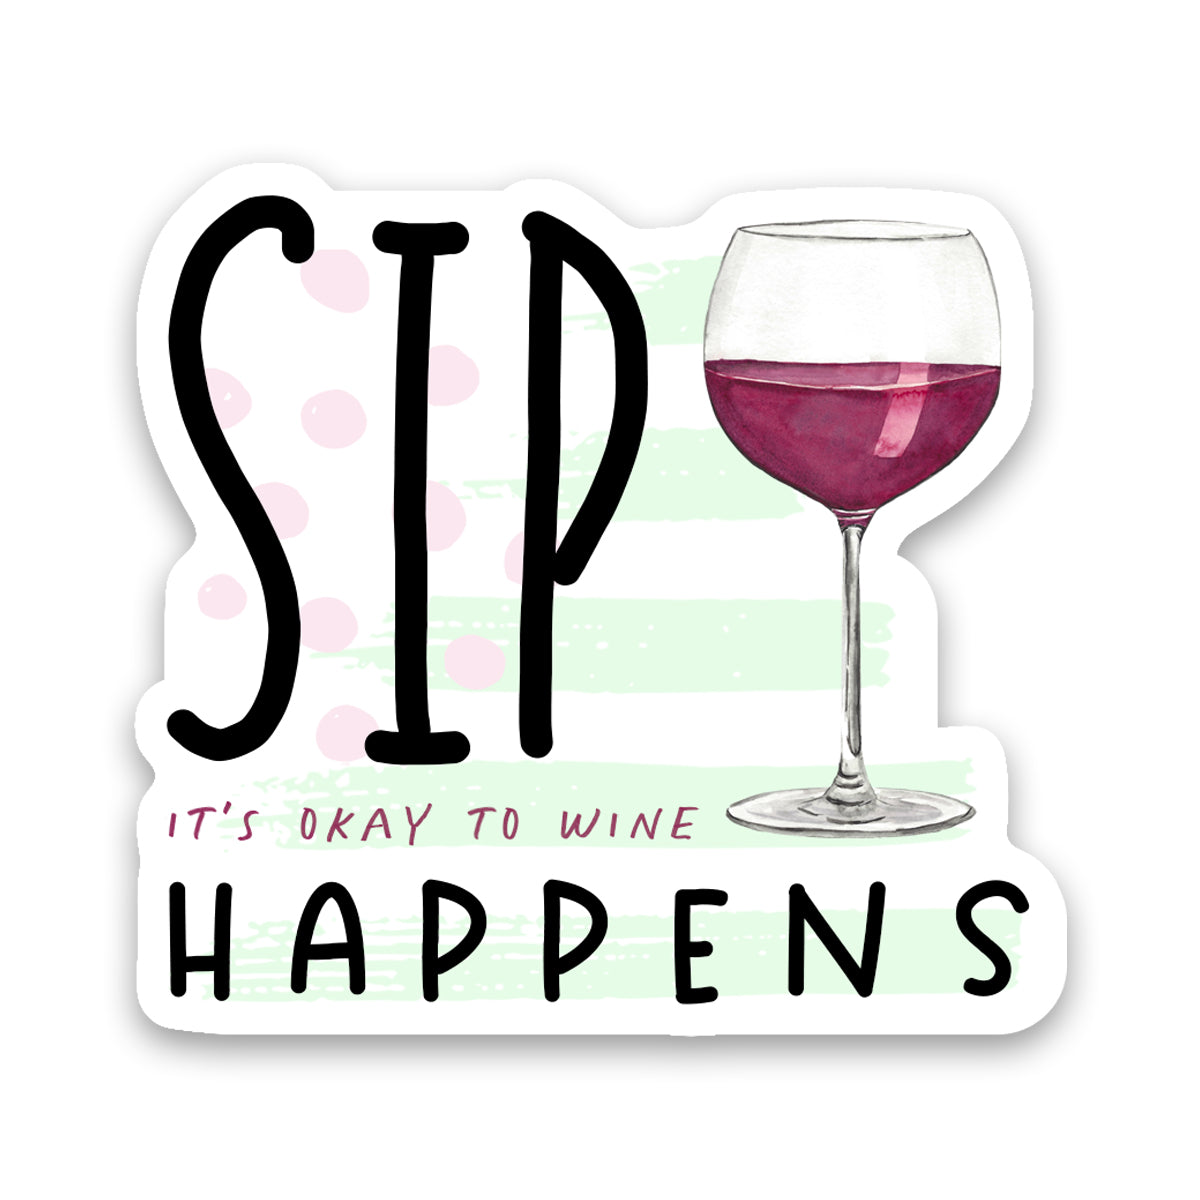 Sip Happens Wine Sticker